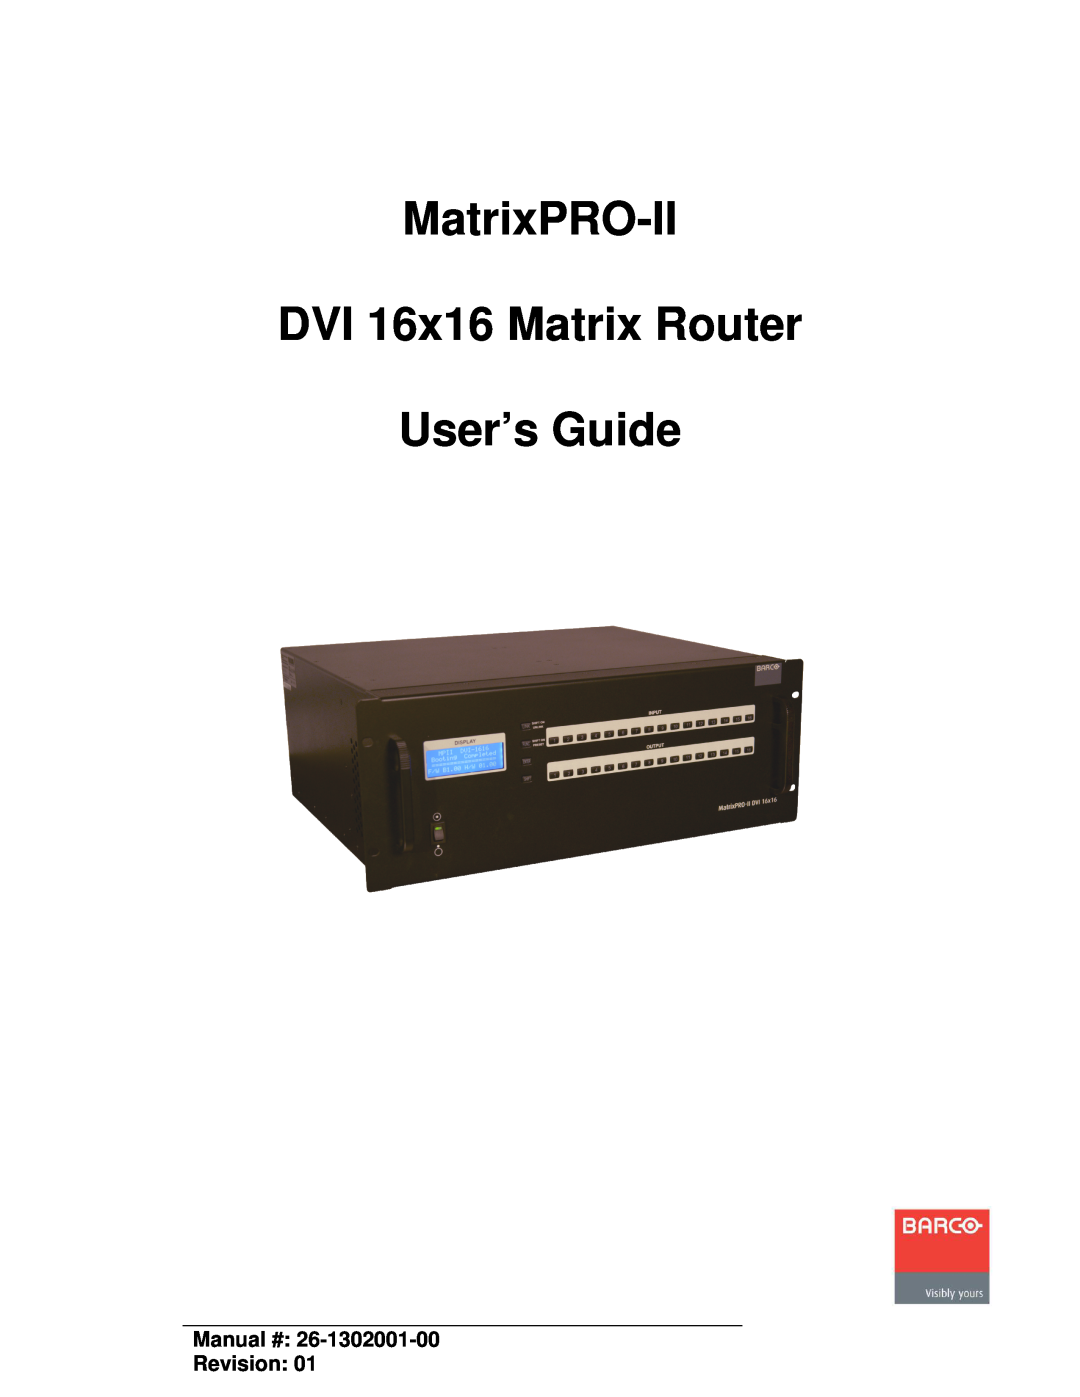 Barco 26-1302001-00 manual Manual # Revision, MatrixPRO-II DVI 16x16 Matrix Router User’s Guide 